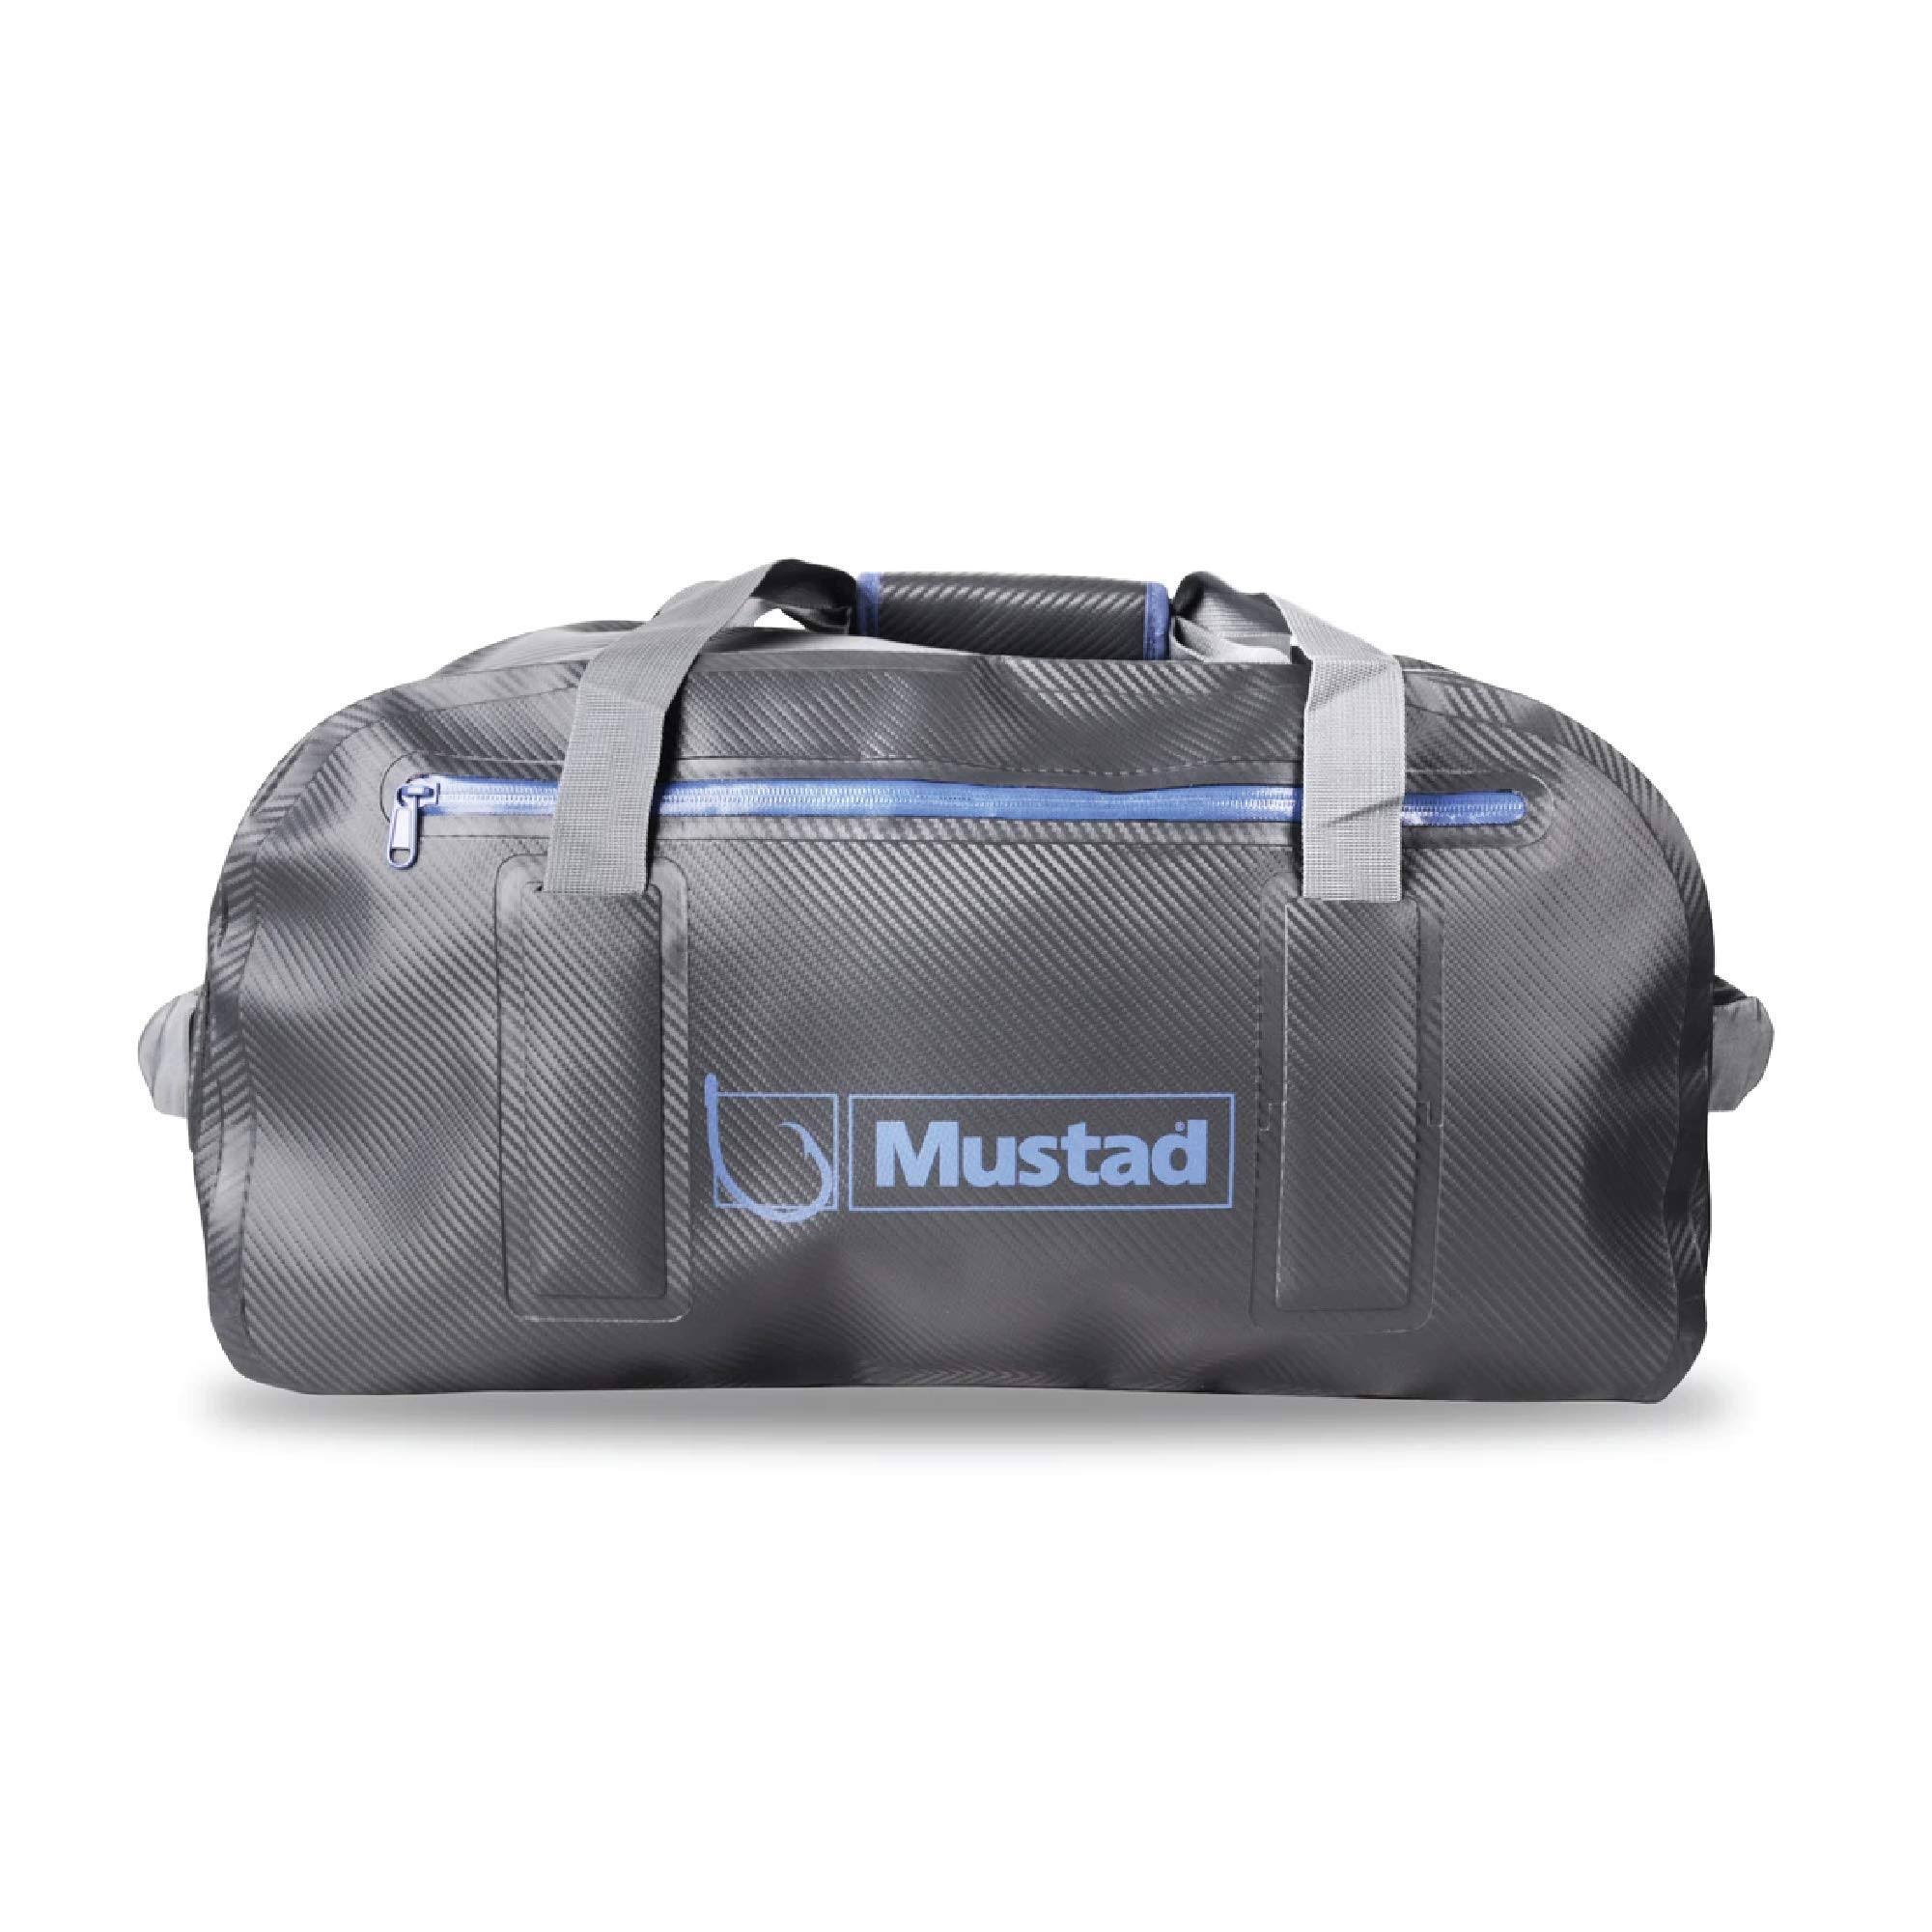 Mustad MB016 Dry Duffel Bag - Dark Grey and Blue, 50L